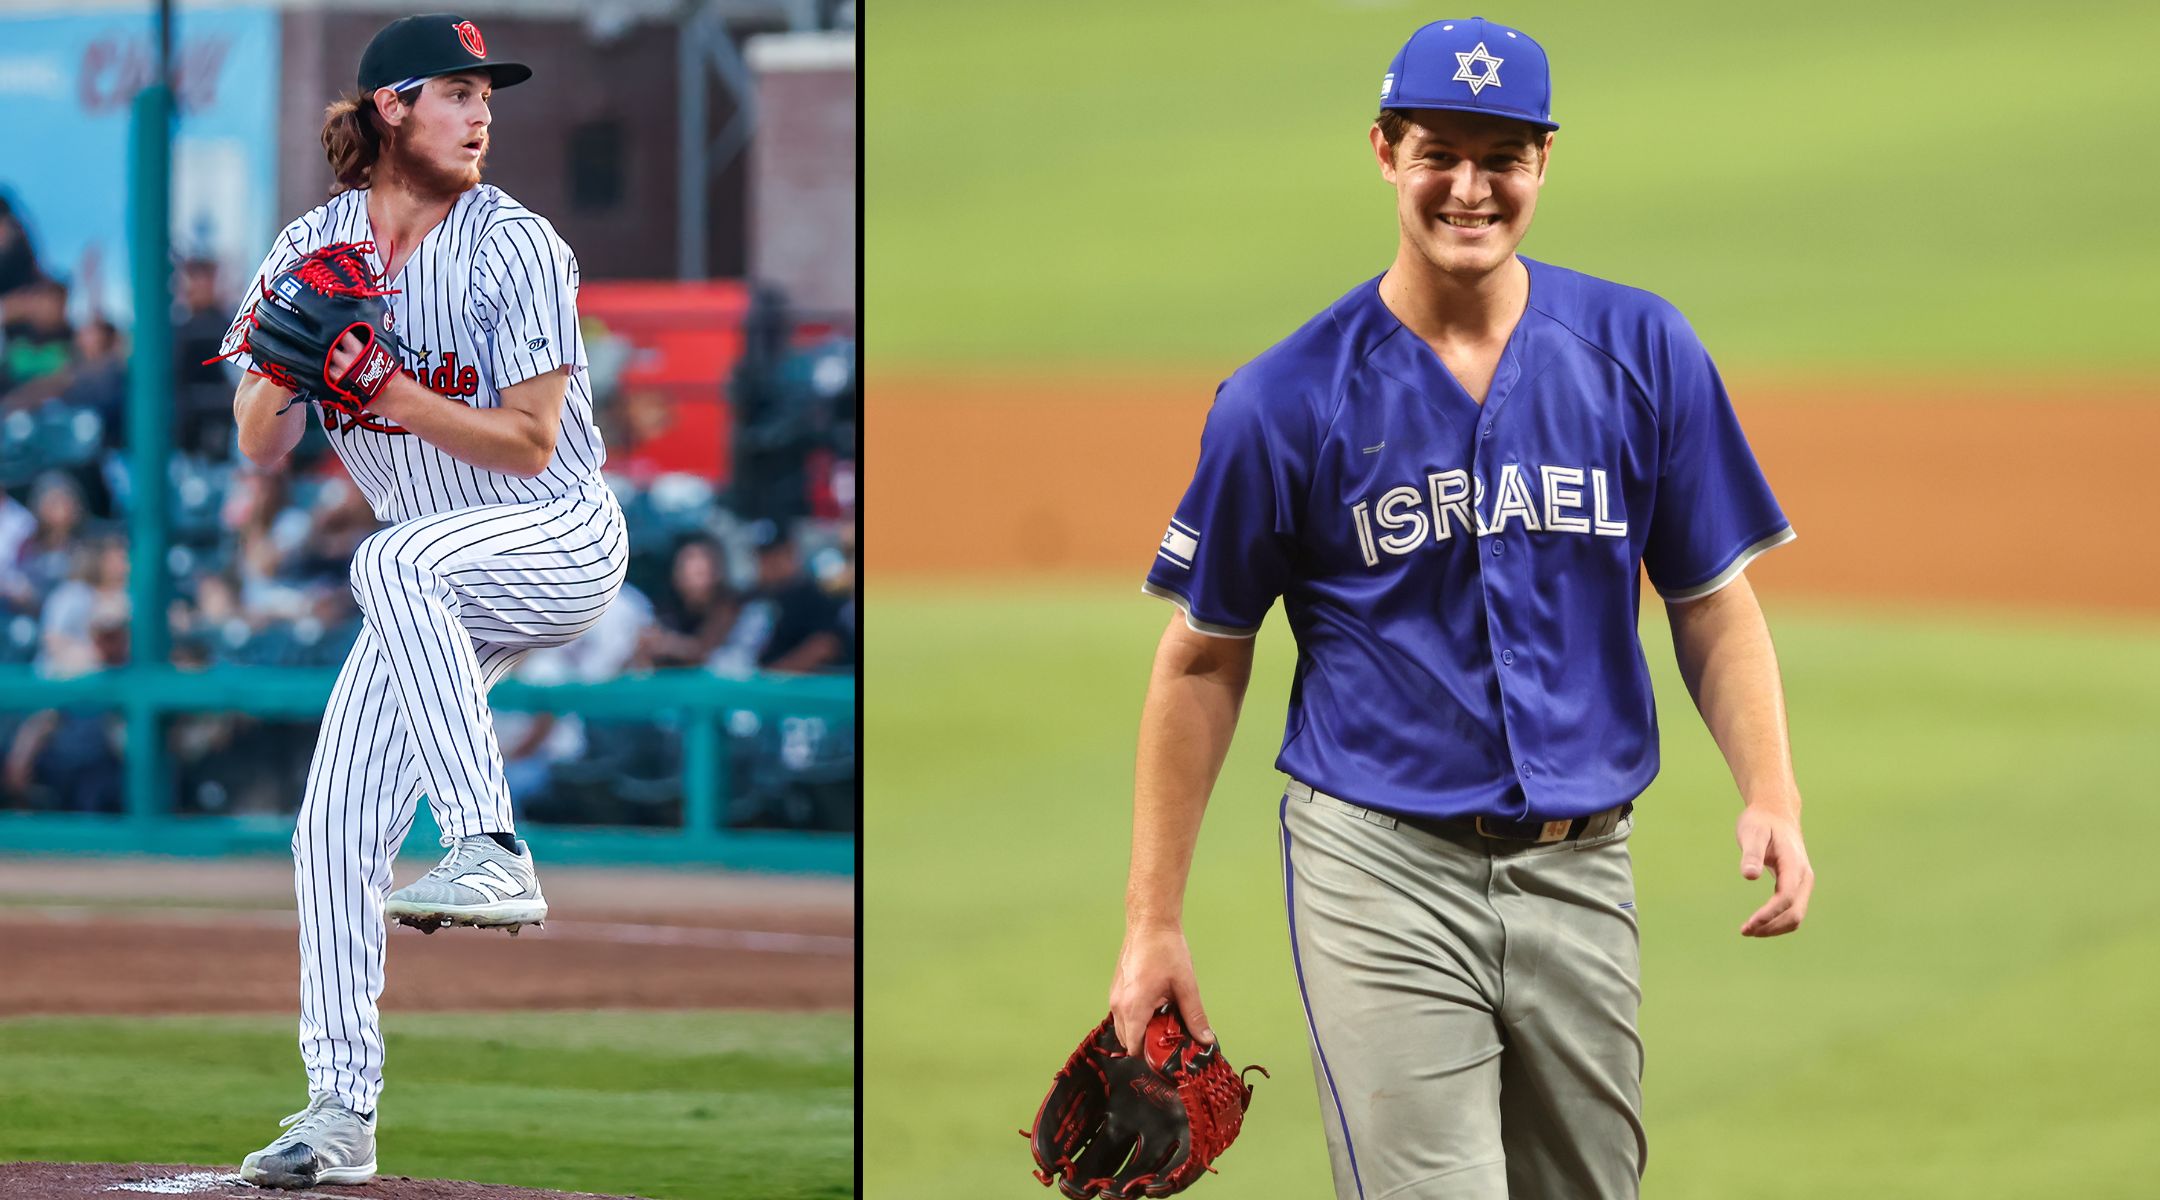 The Jewish Sport Report: How Jacob Steinmetz is navigating minor league life as an Orthodox Jew